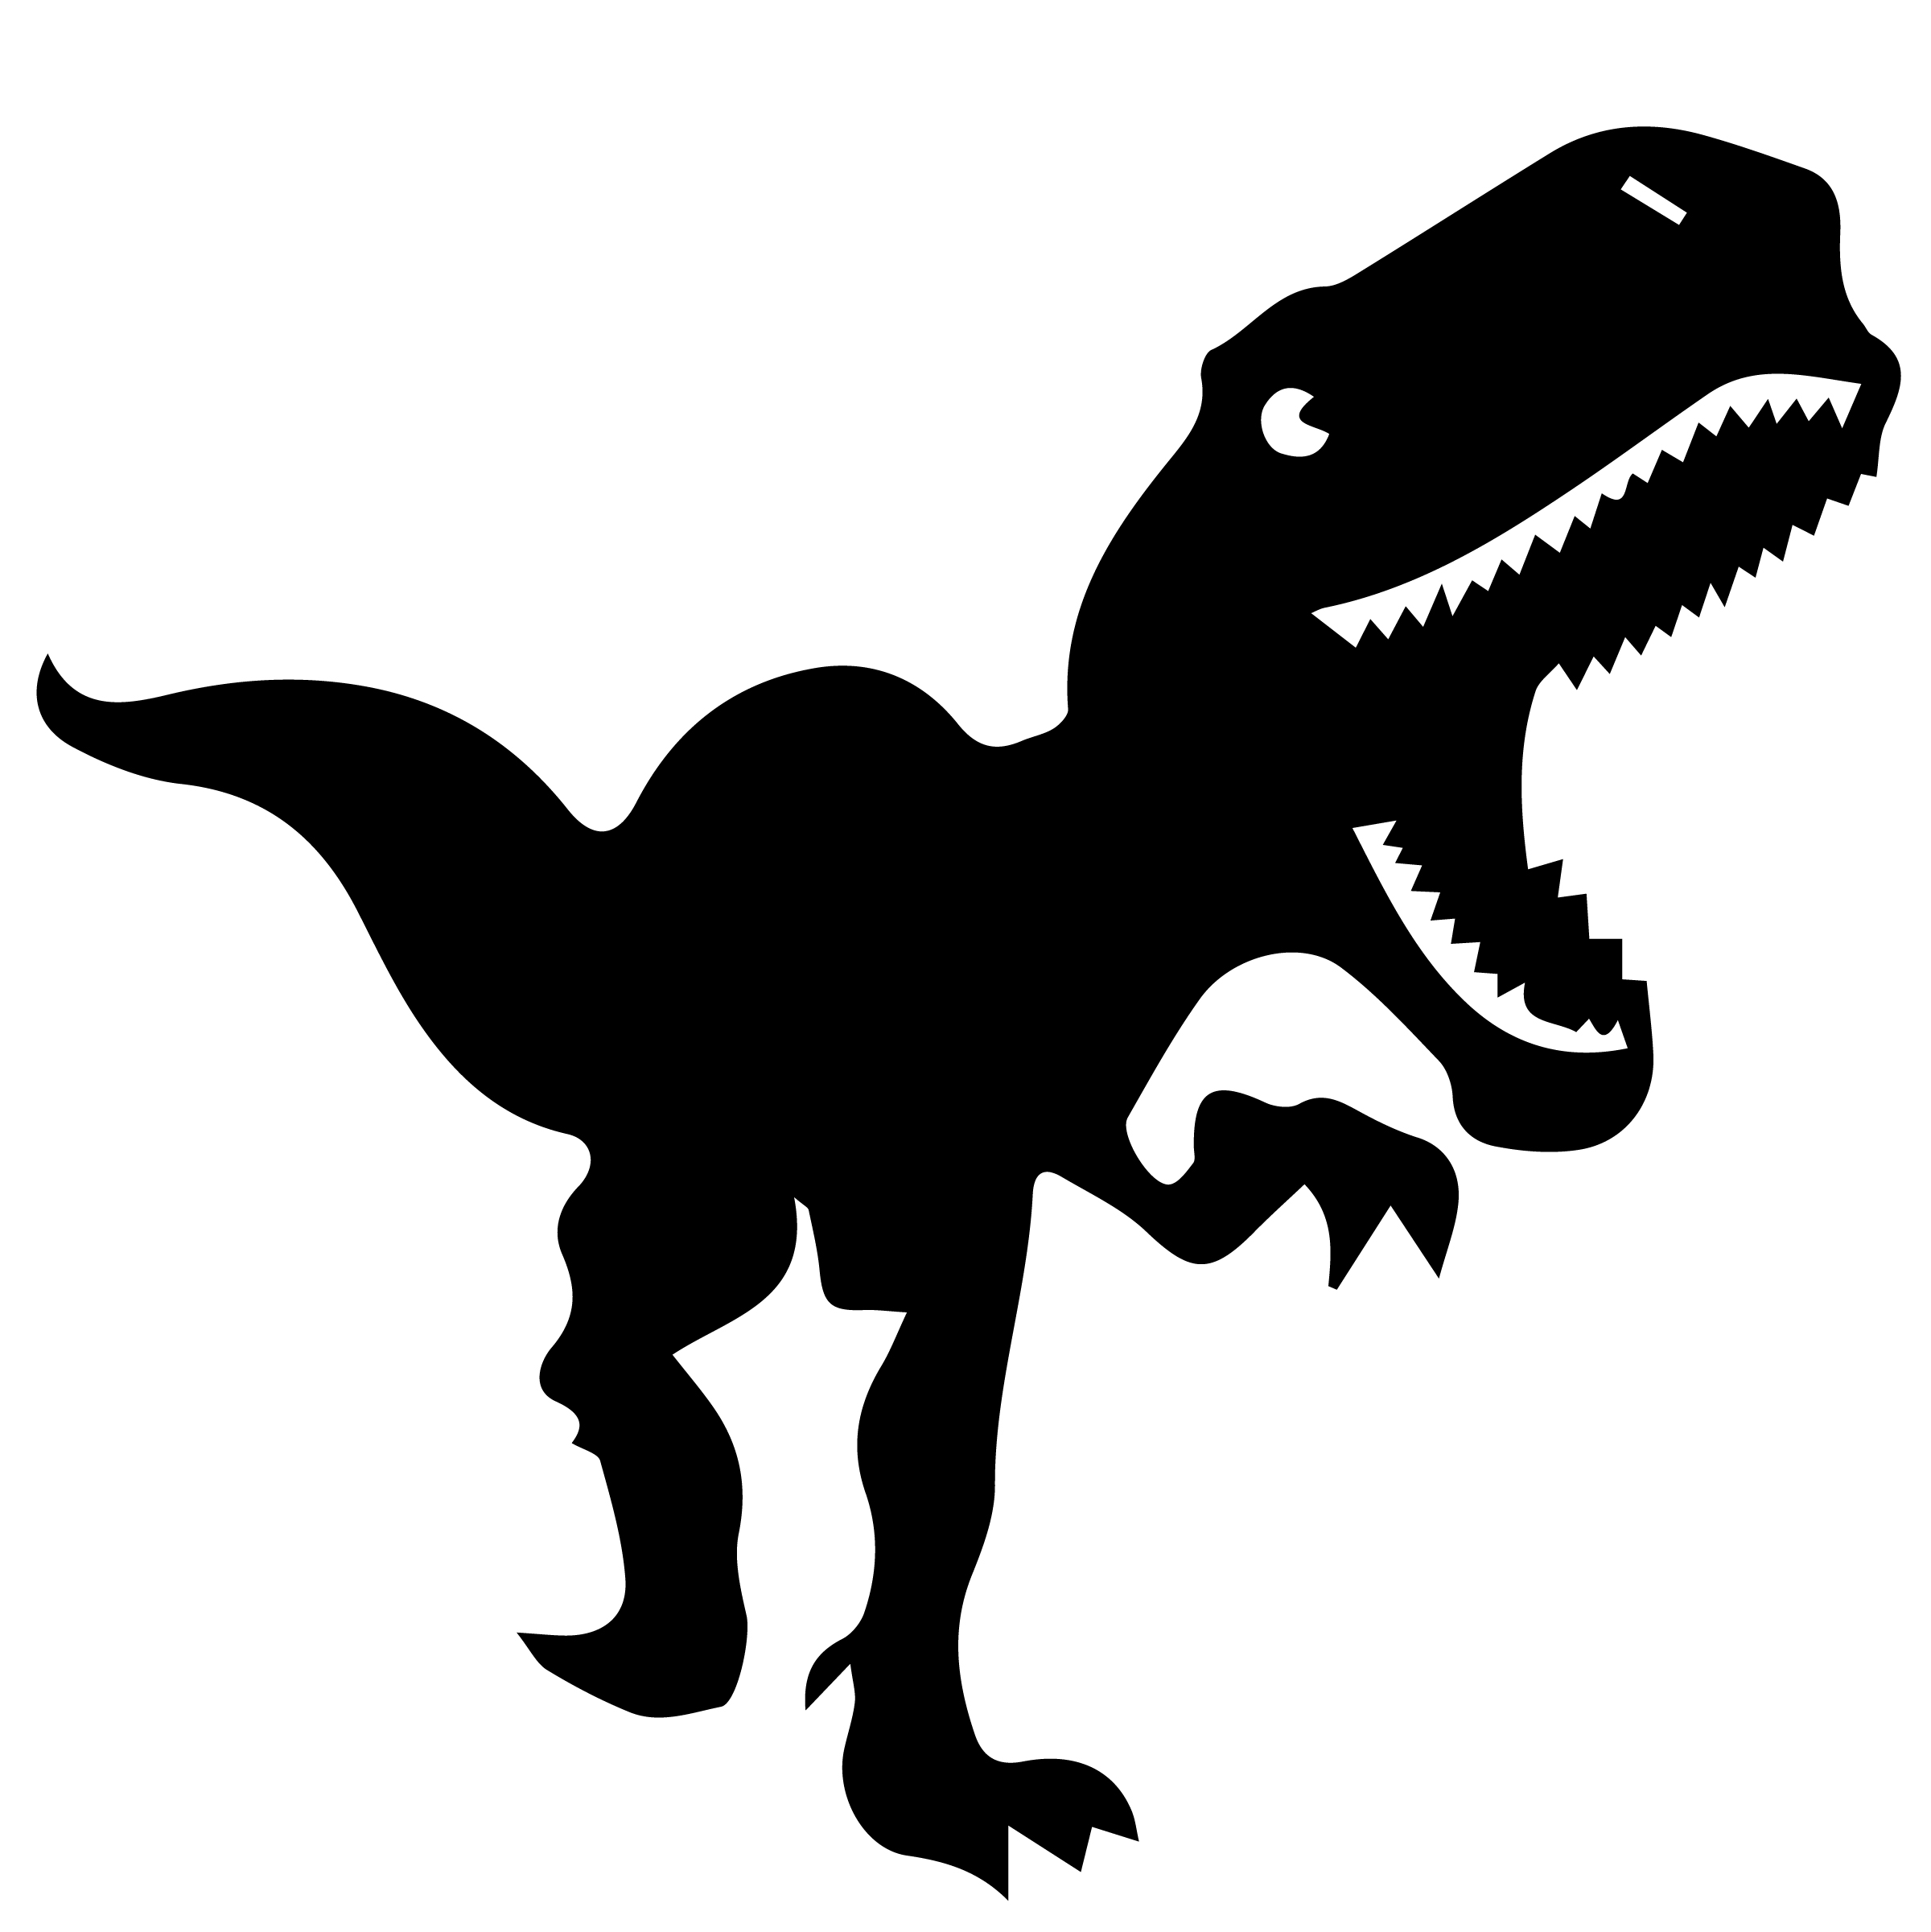 Download t-rex vector eps - Download Free Vectors, Clipart Graphics ...